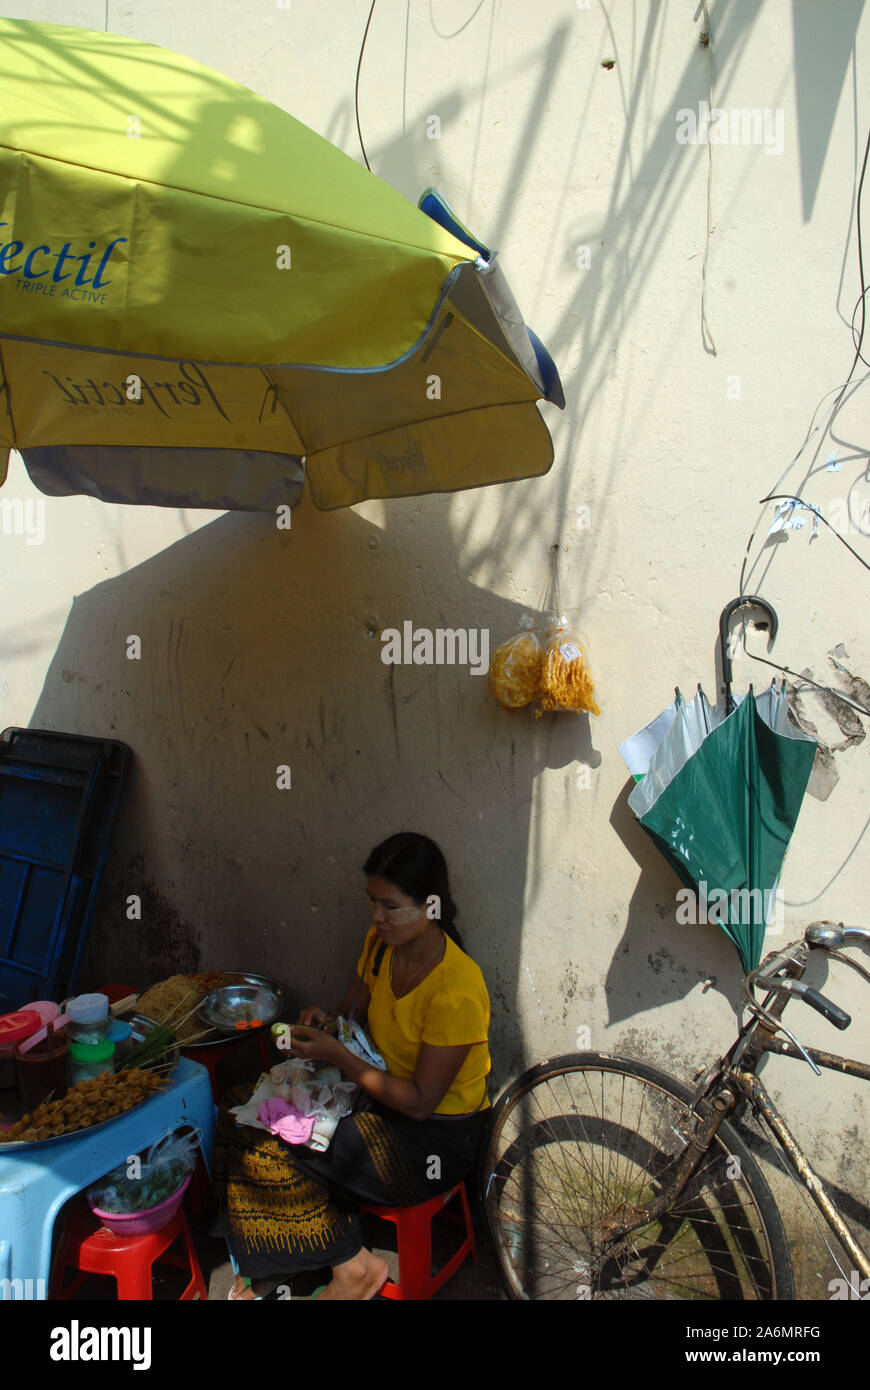 Old umbrella giving shade, Yangon, Myanmar, Asia. Stock Photo